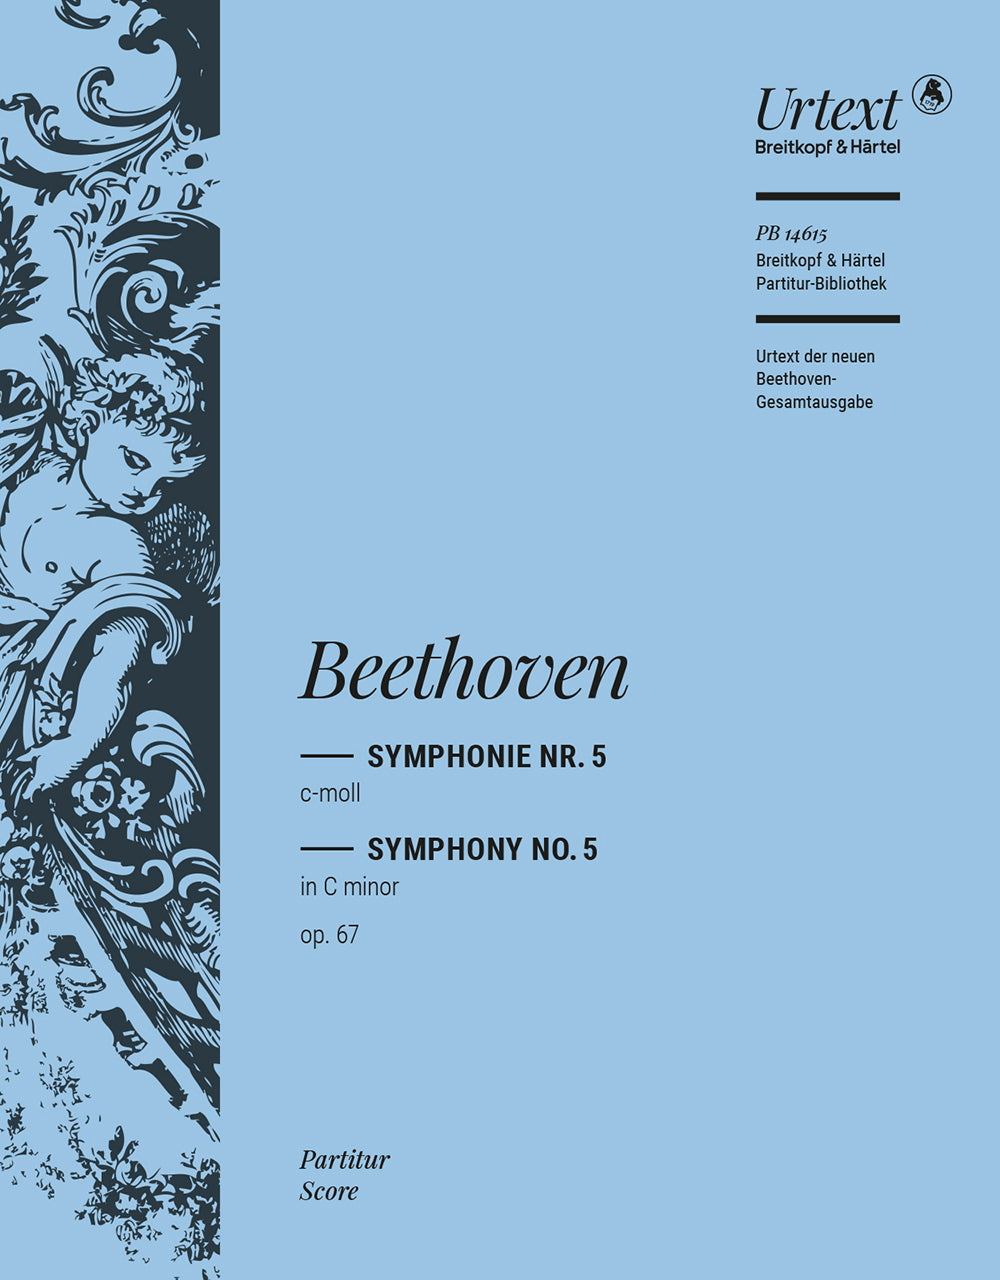 Beethoven Symphony No 5 in C minor Opus 67